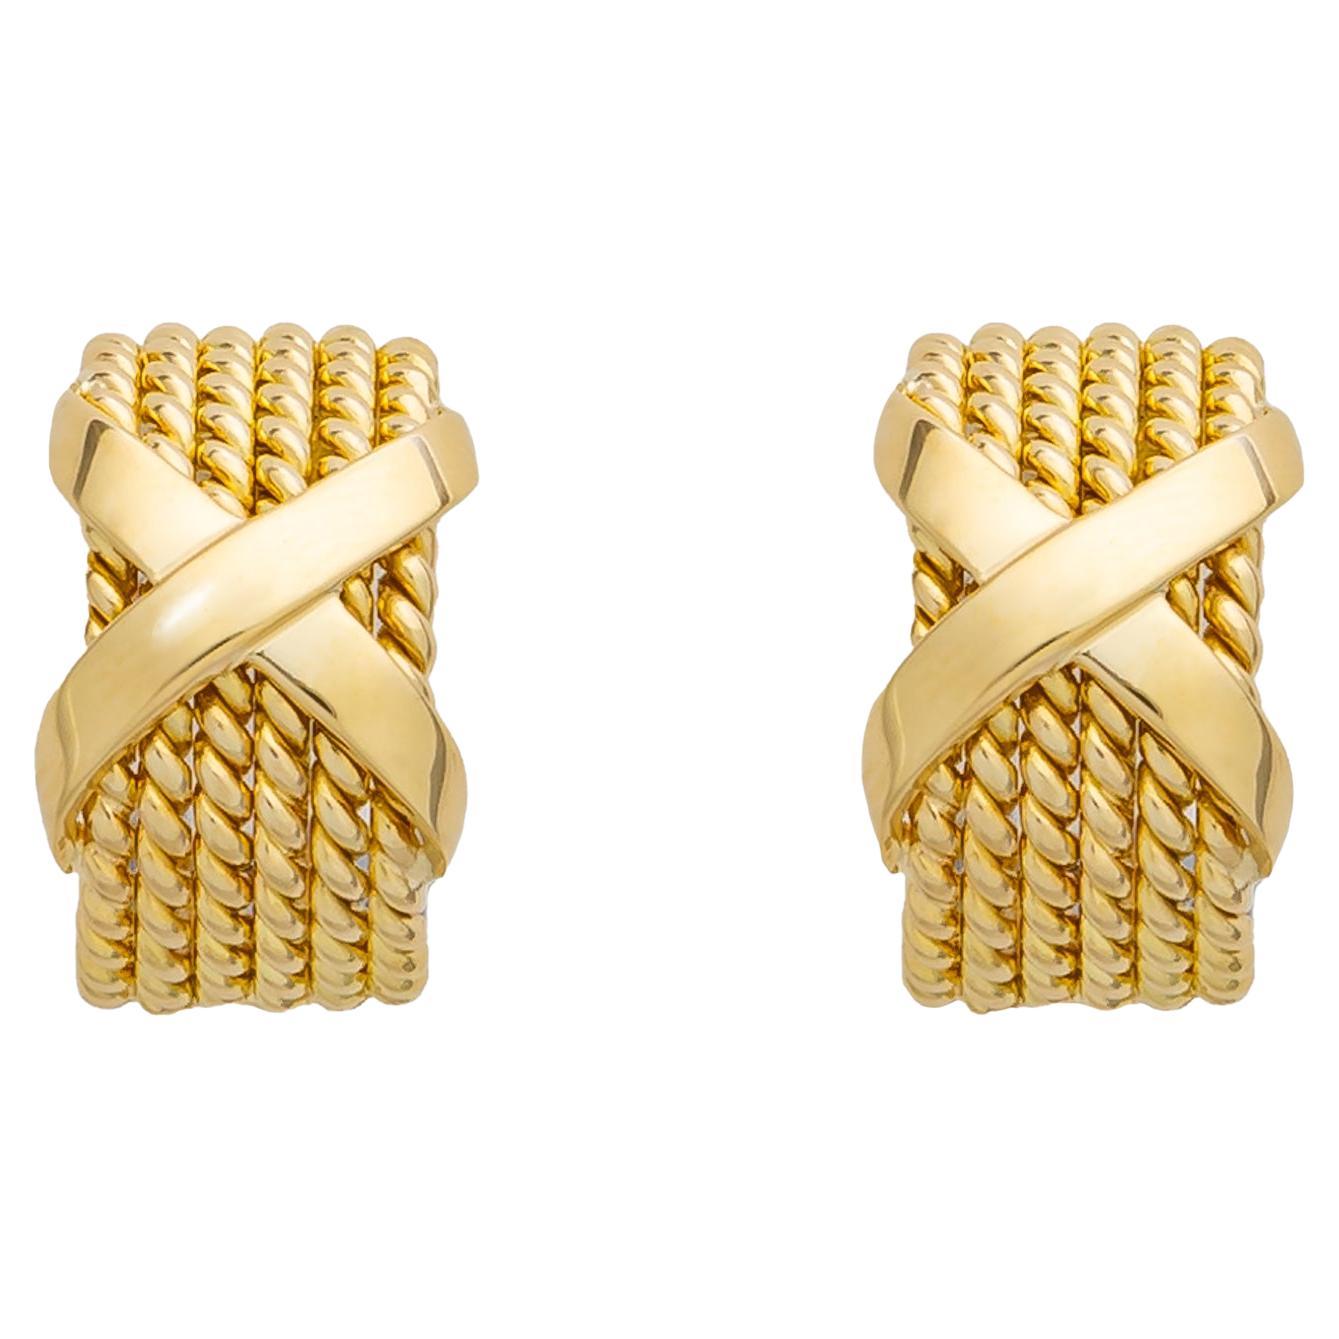 Schlumberger for Tiffany & Co. Gold Earrings